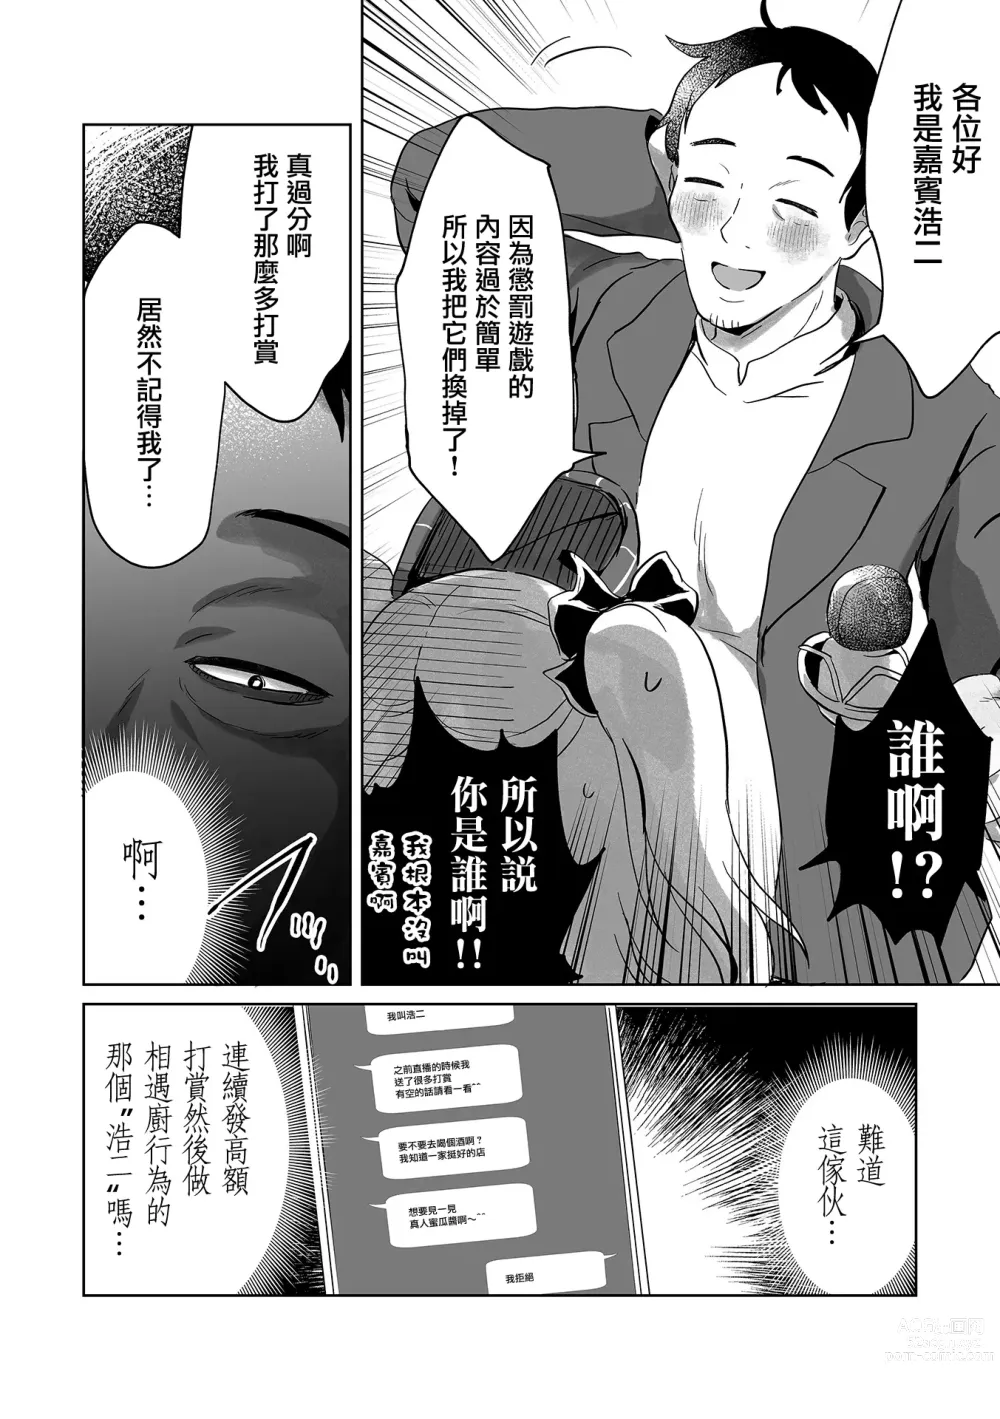 Page 5 of manga Offline Matching